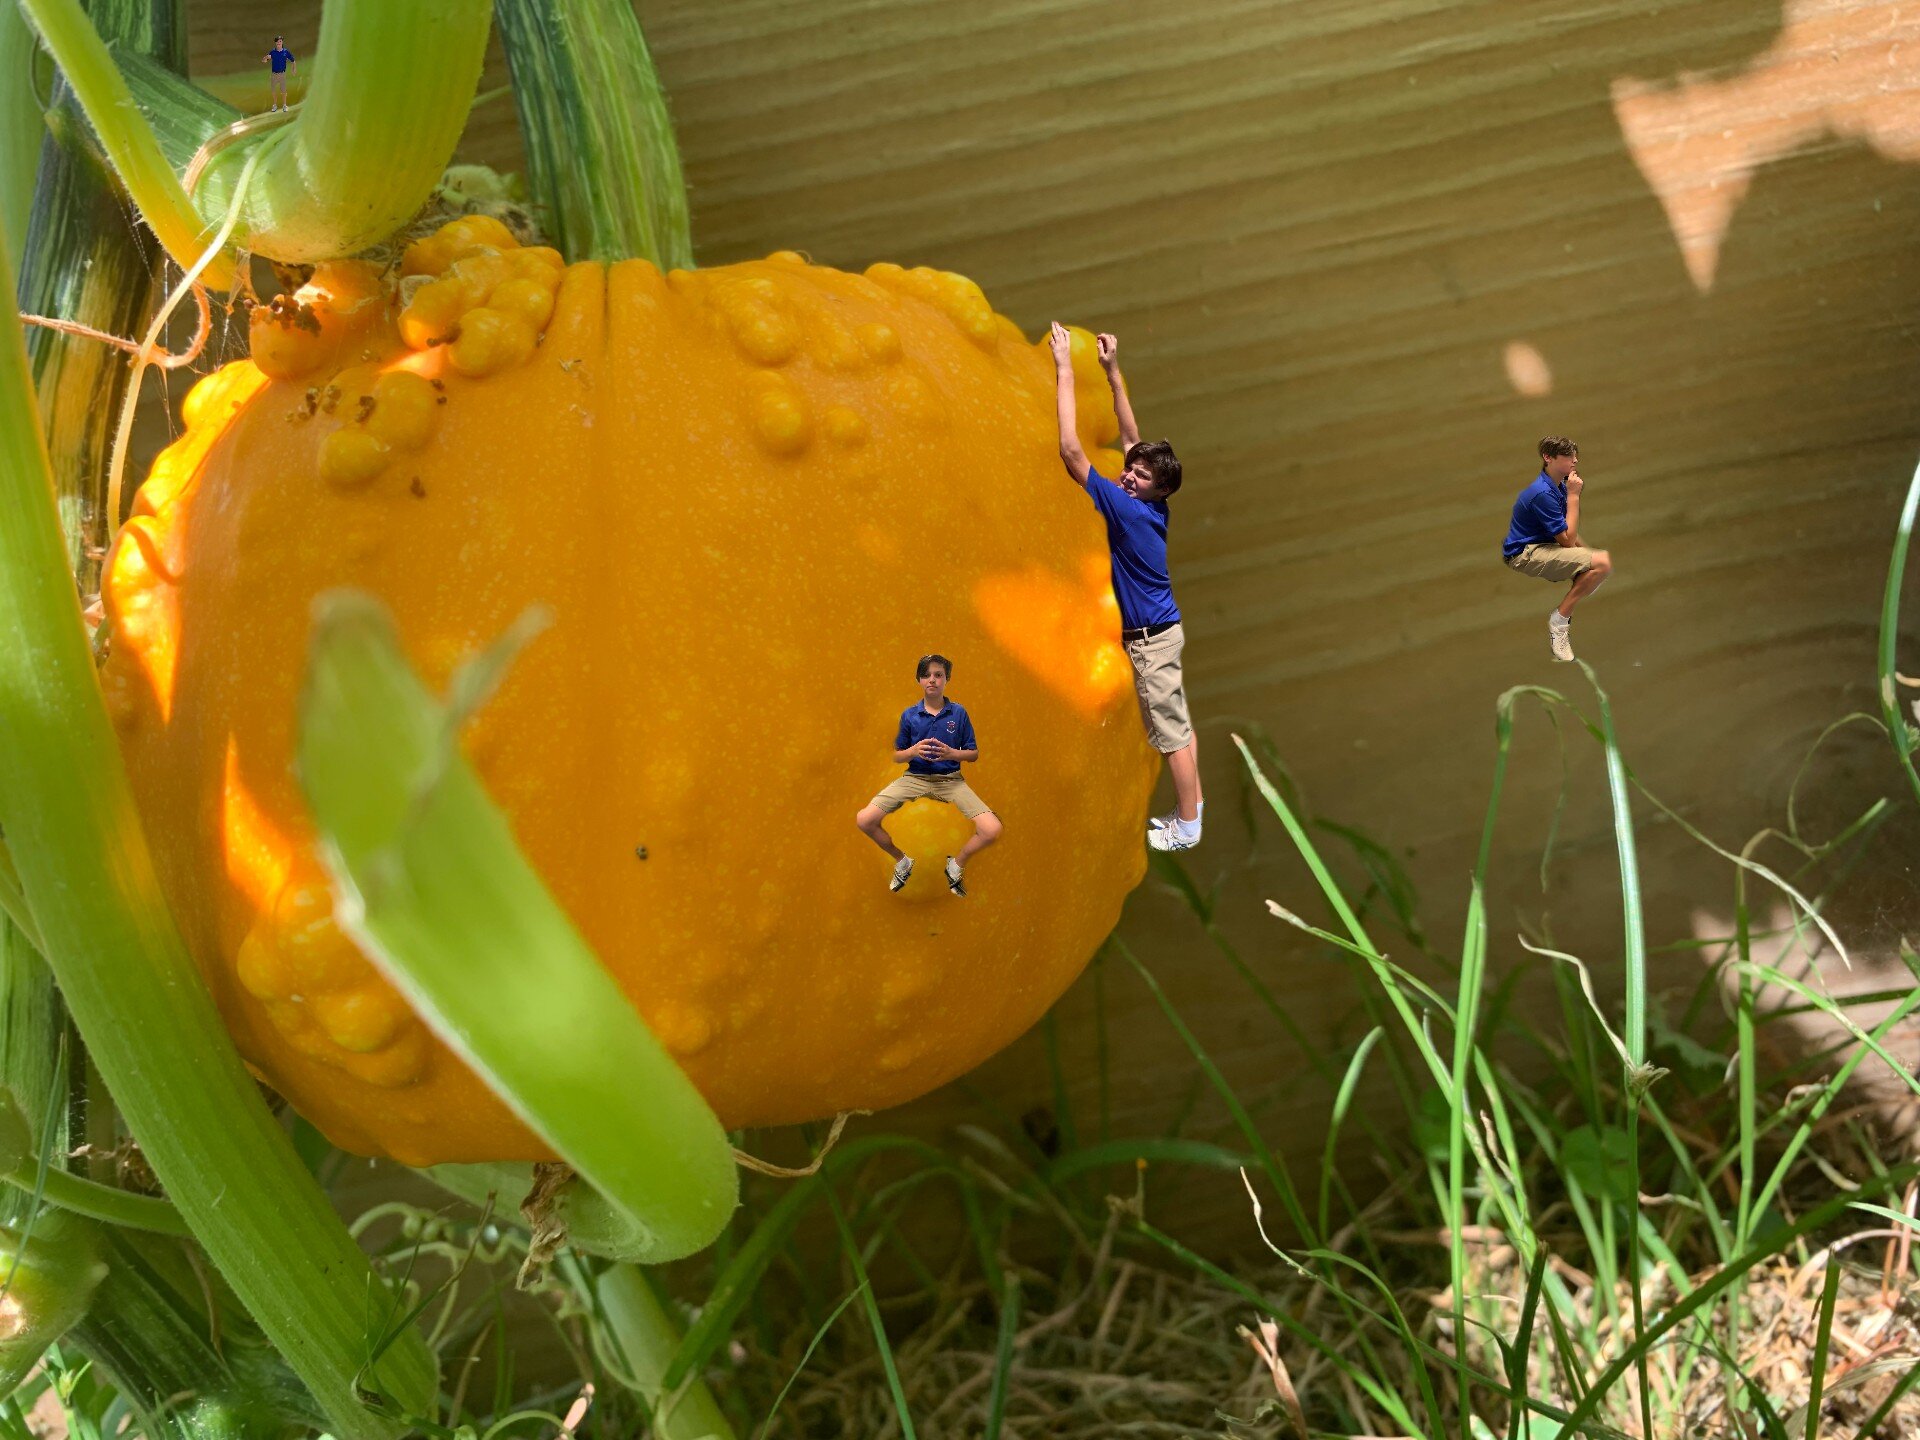 Dave and the pumpkin.jpeg